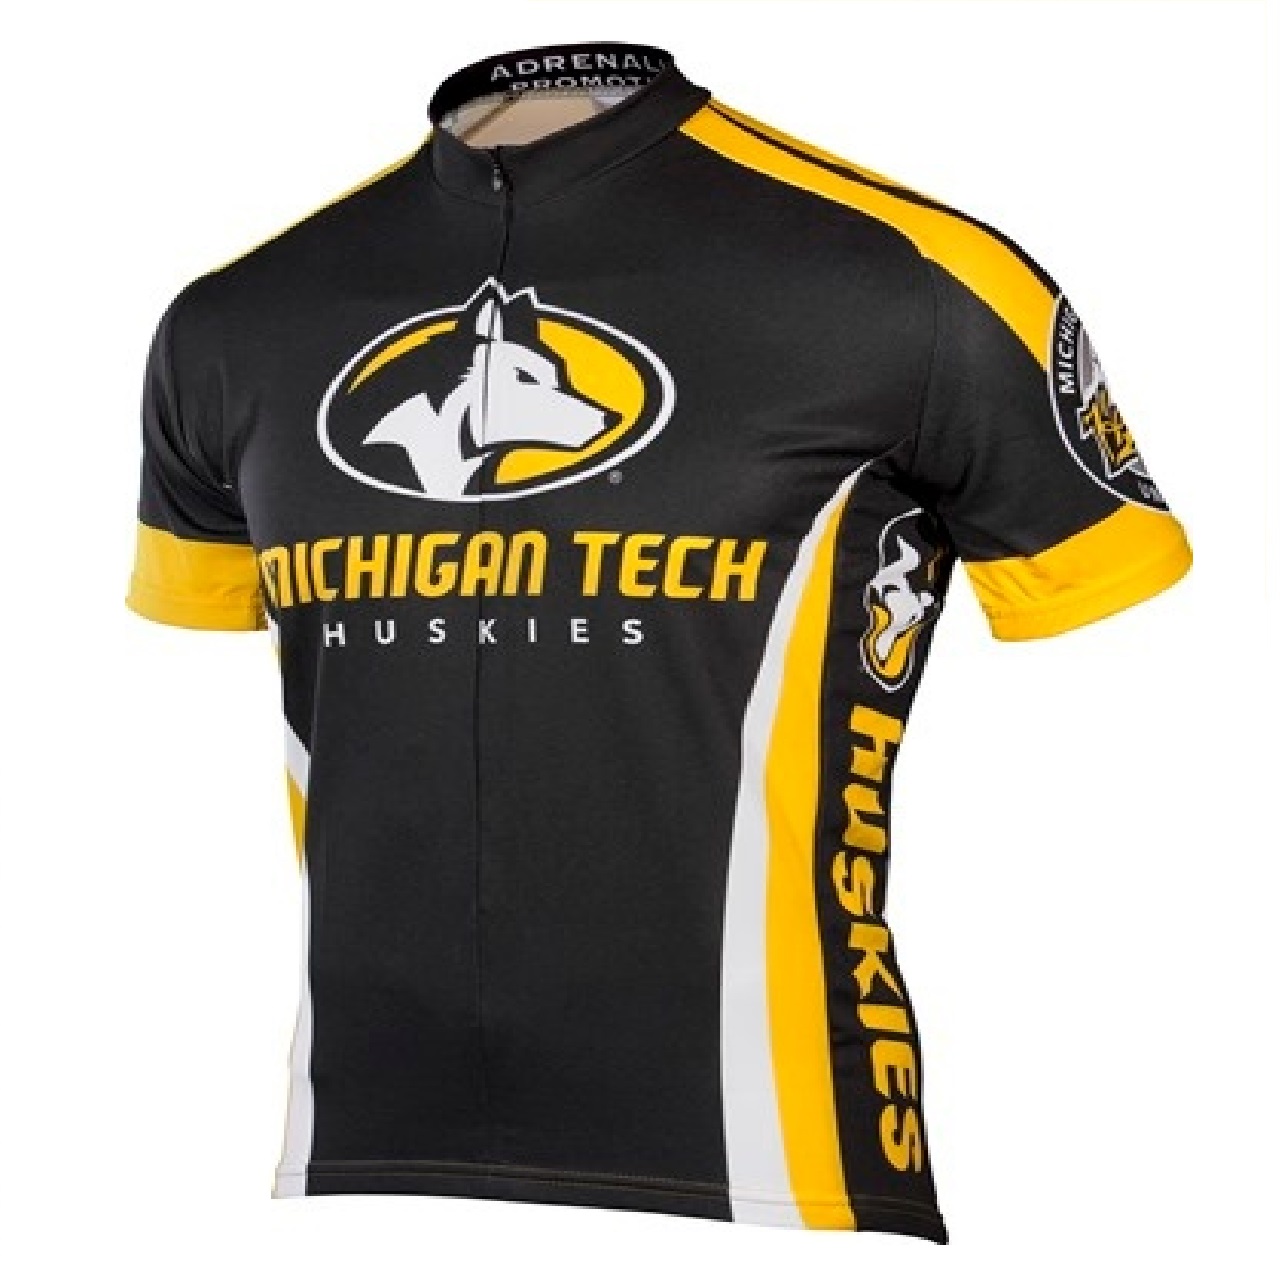 Adrenaline Promo Michigan Tech Huskies 3/4 zip Men's Cycling Jersey